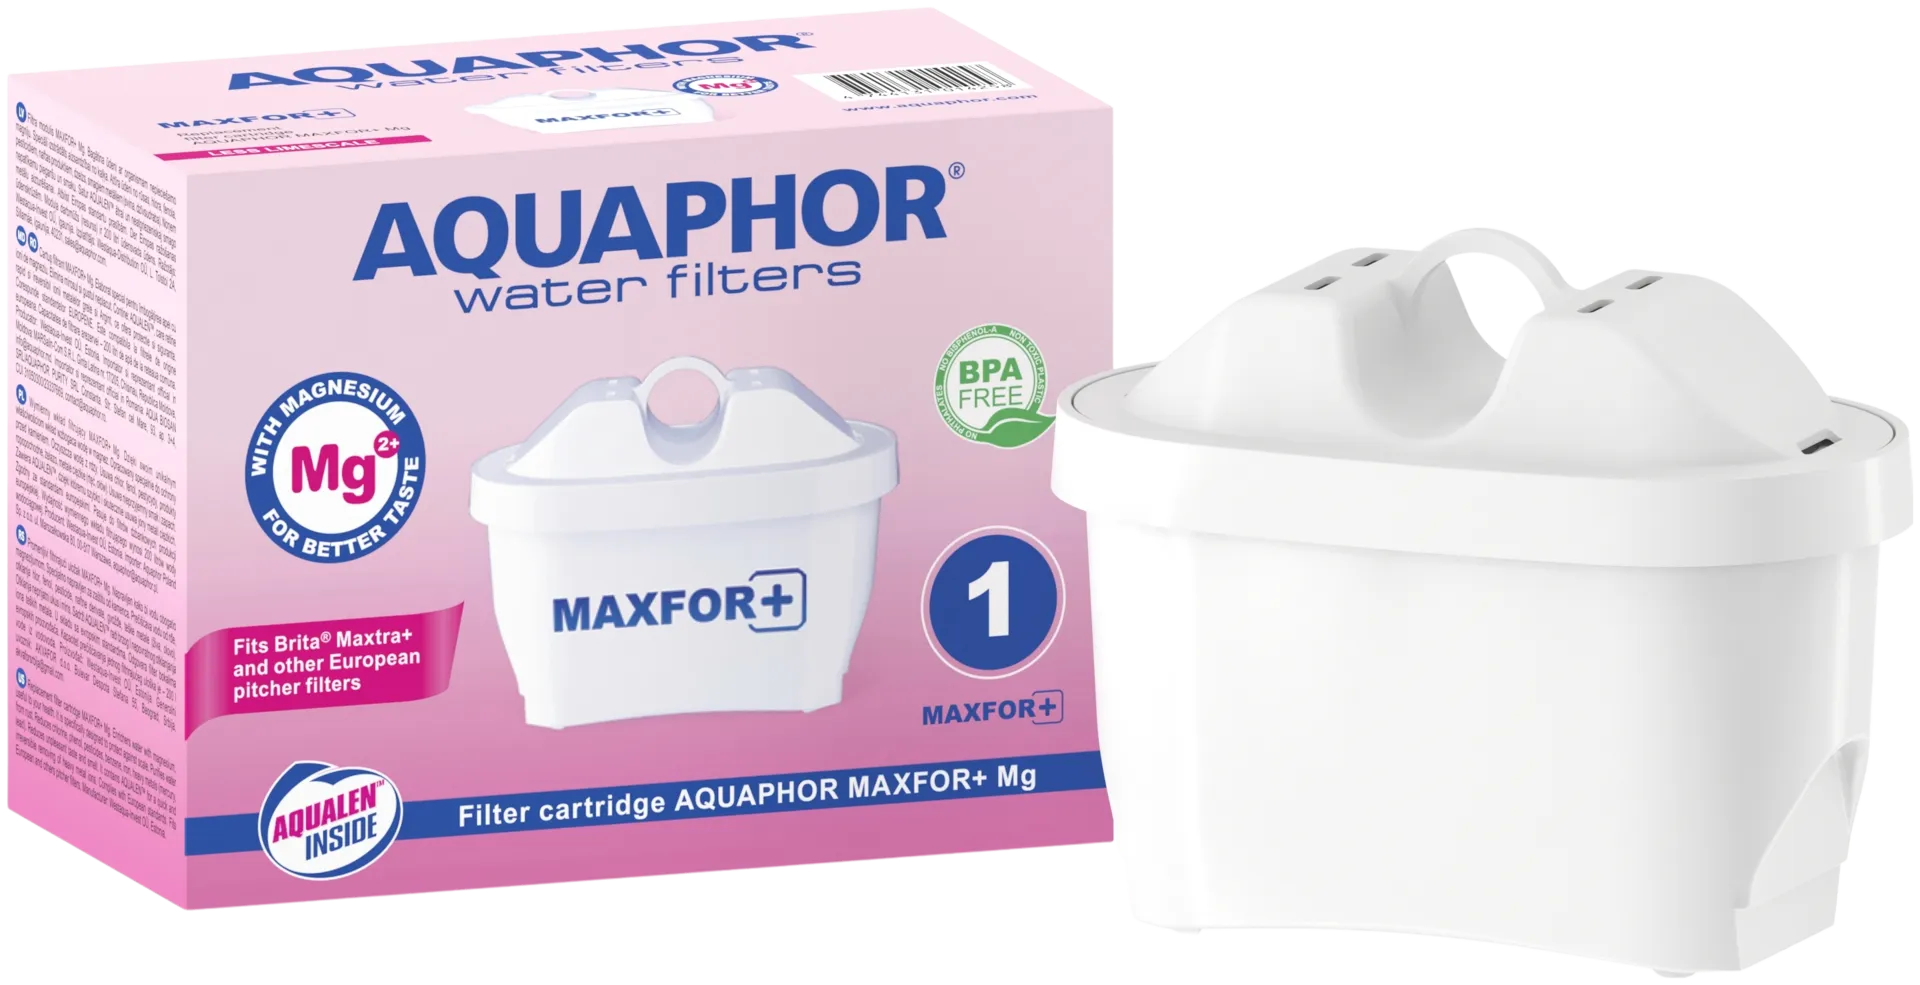 Aquaphor vedensuodatin Maxfor+ Mg 1kpl pakkaus - 1